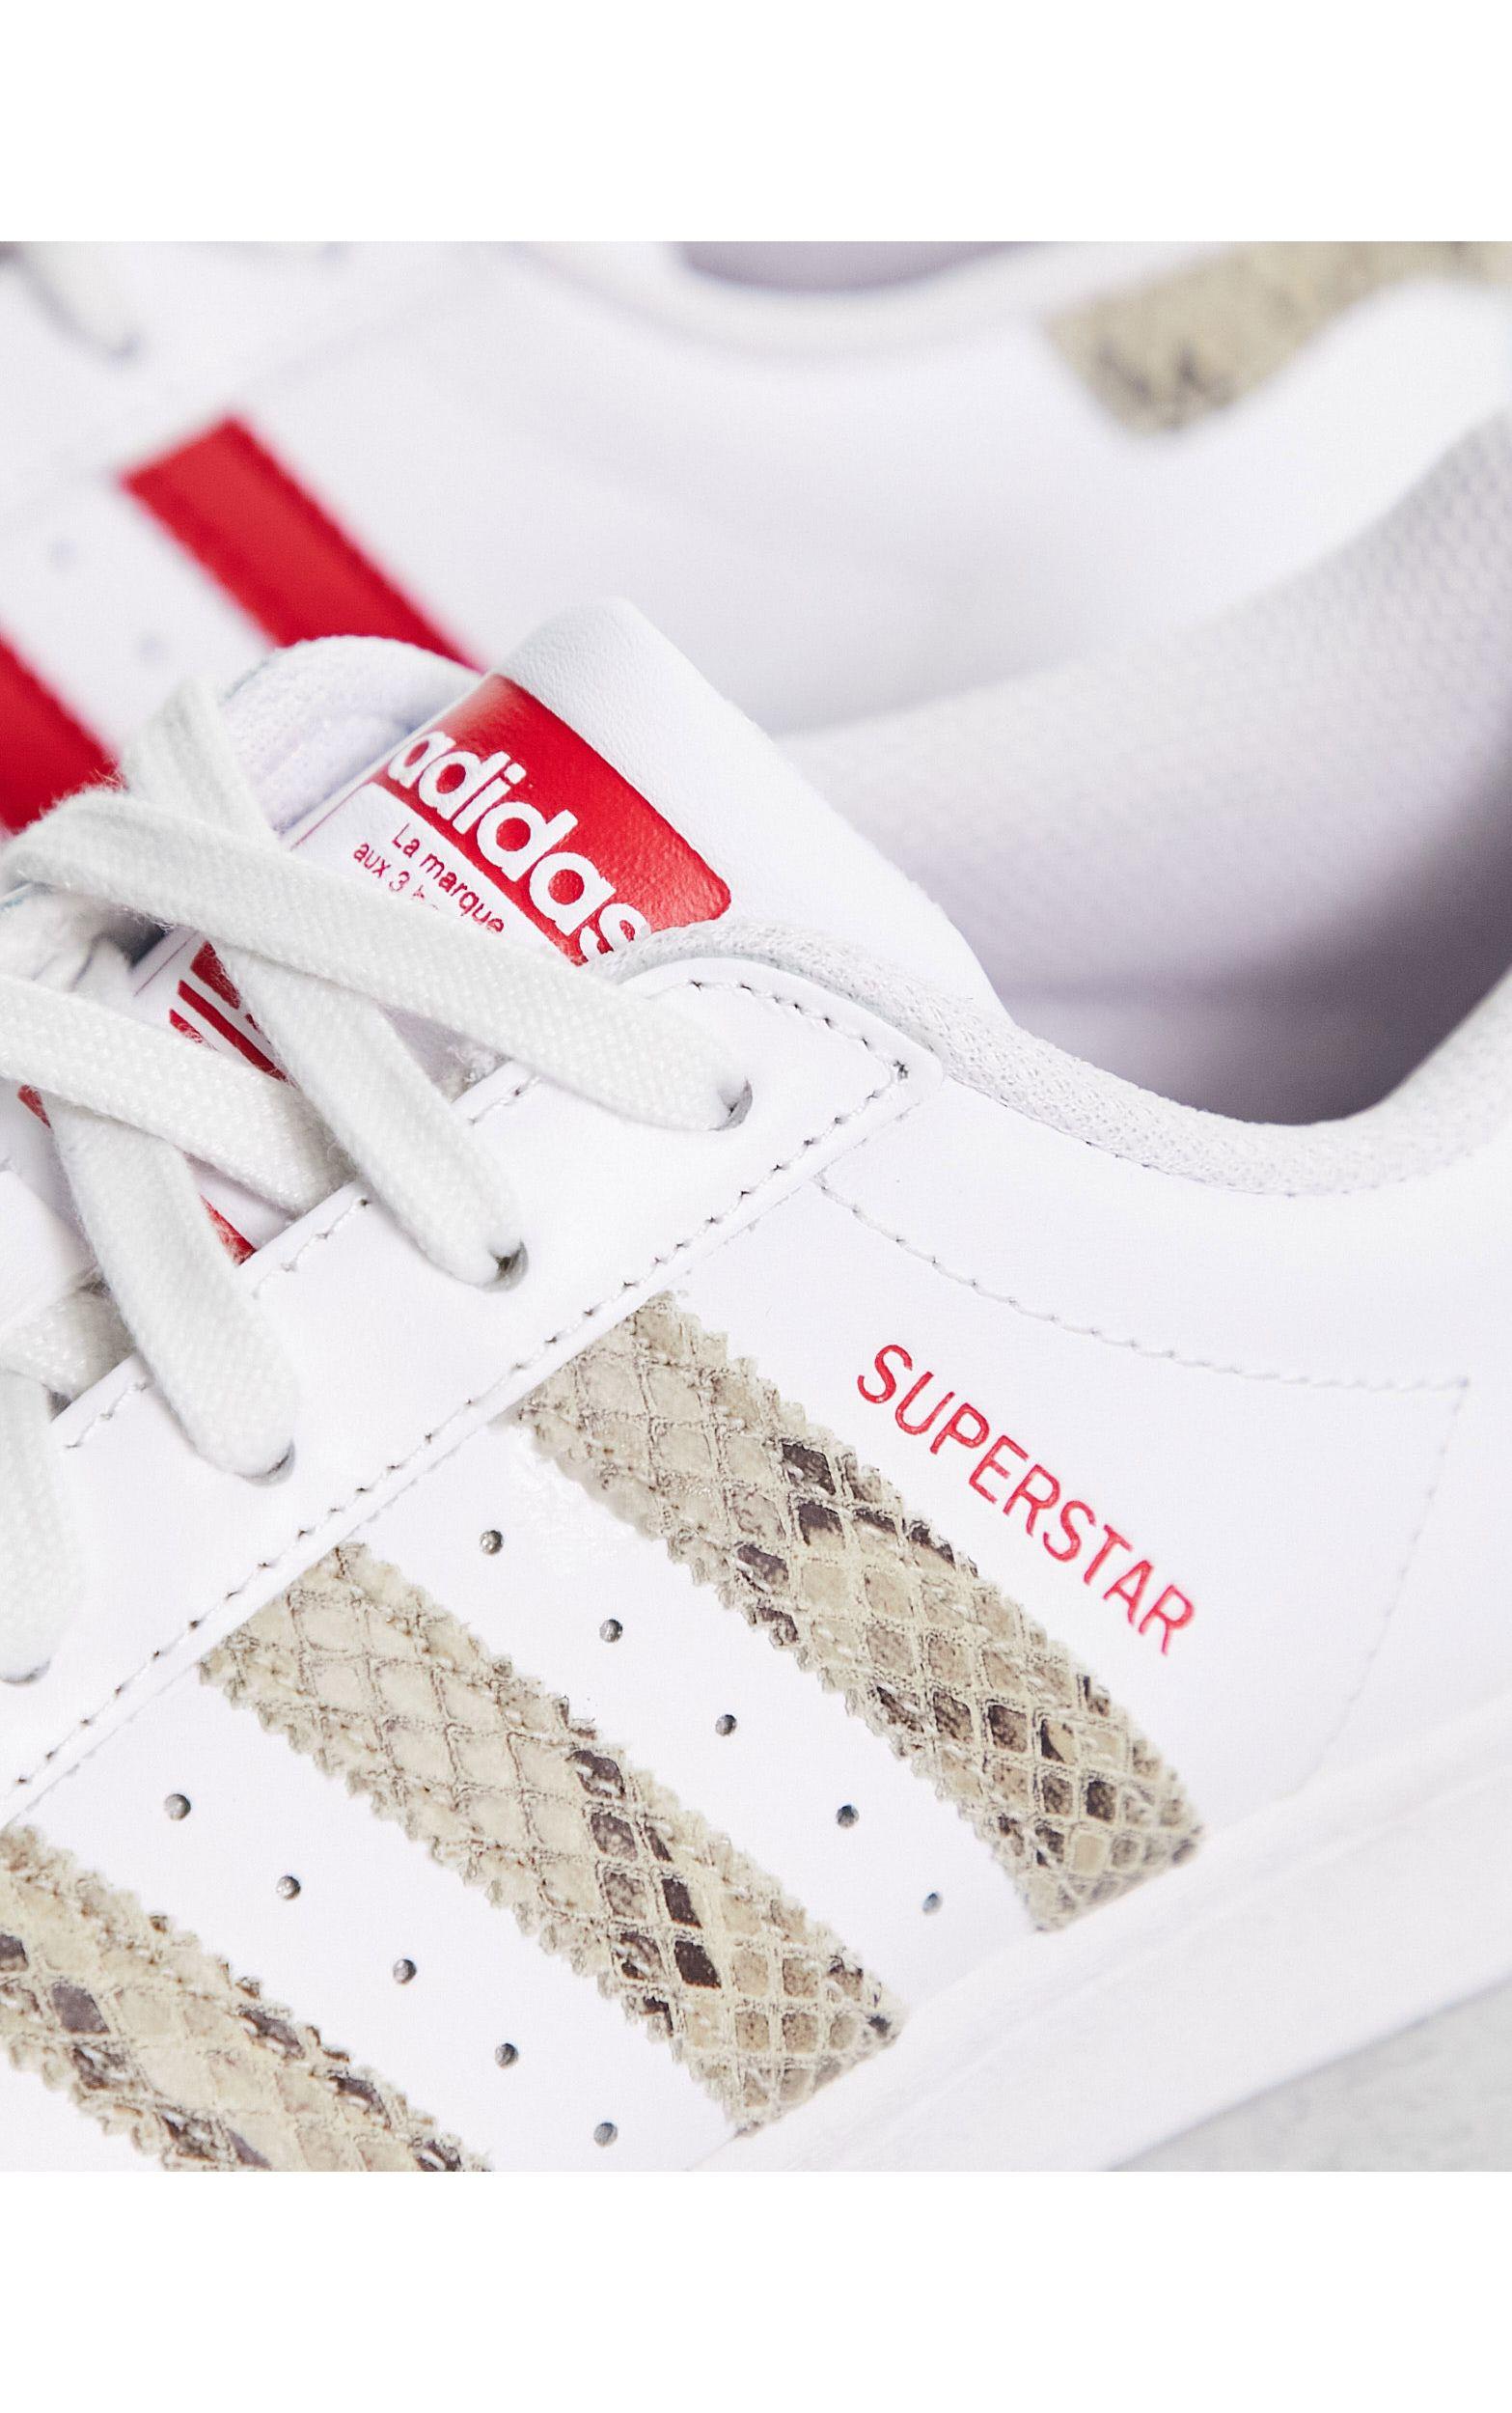 adidas Originals Superstar Snake Print Sneakers in White | Lyst